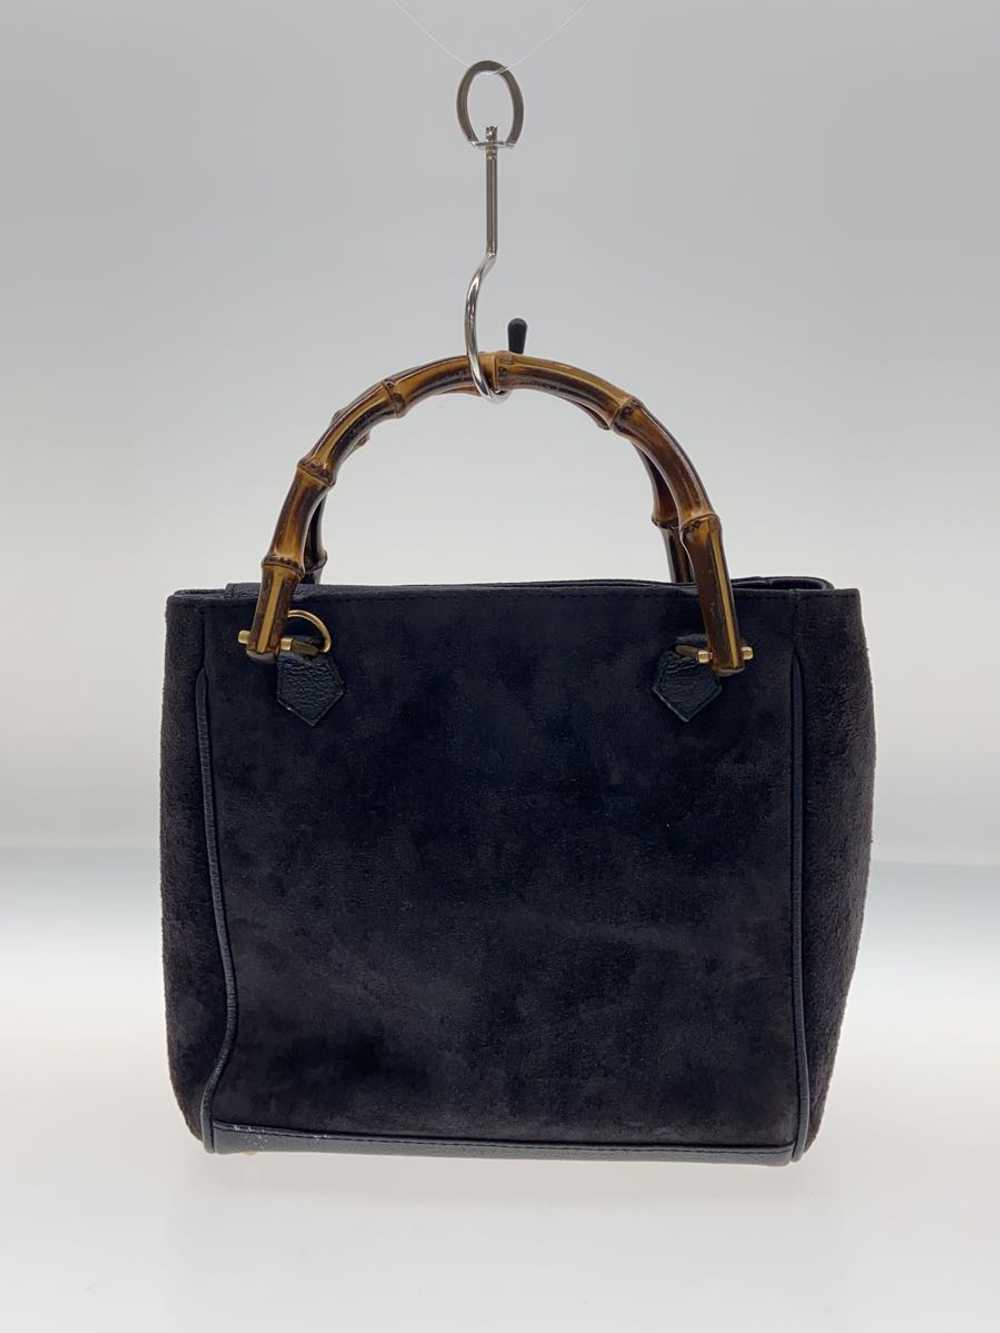 Used Gucci Handbag/Suede/Nvy/Bamboo Bag - image 3